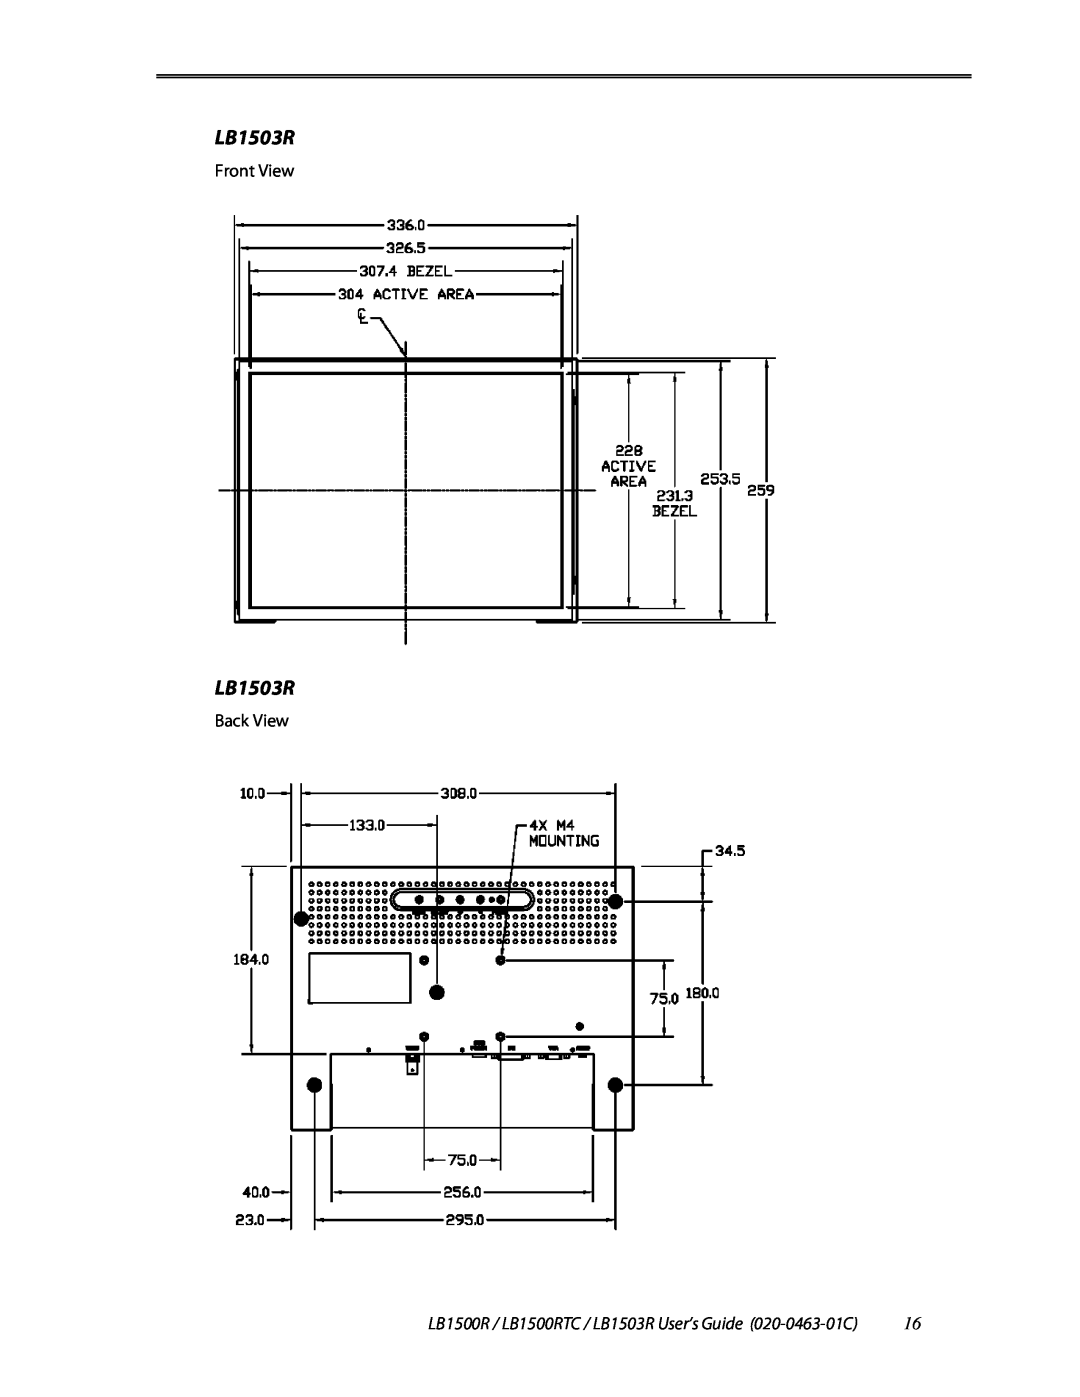 Planar manual Front View, Back View, LB1500R / LB1500RTC / LB1503R User’s Guide 020-0463-01C 